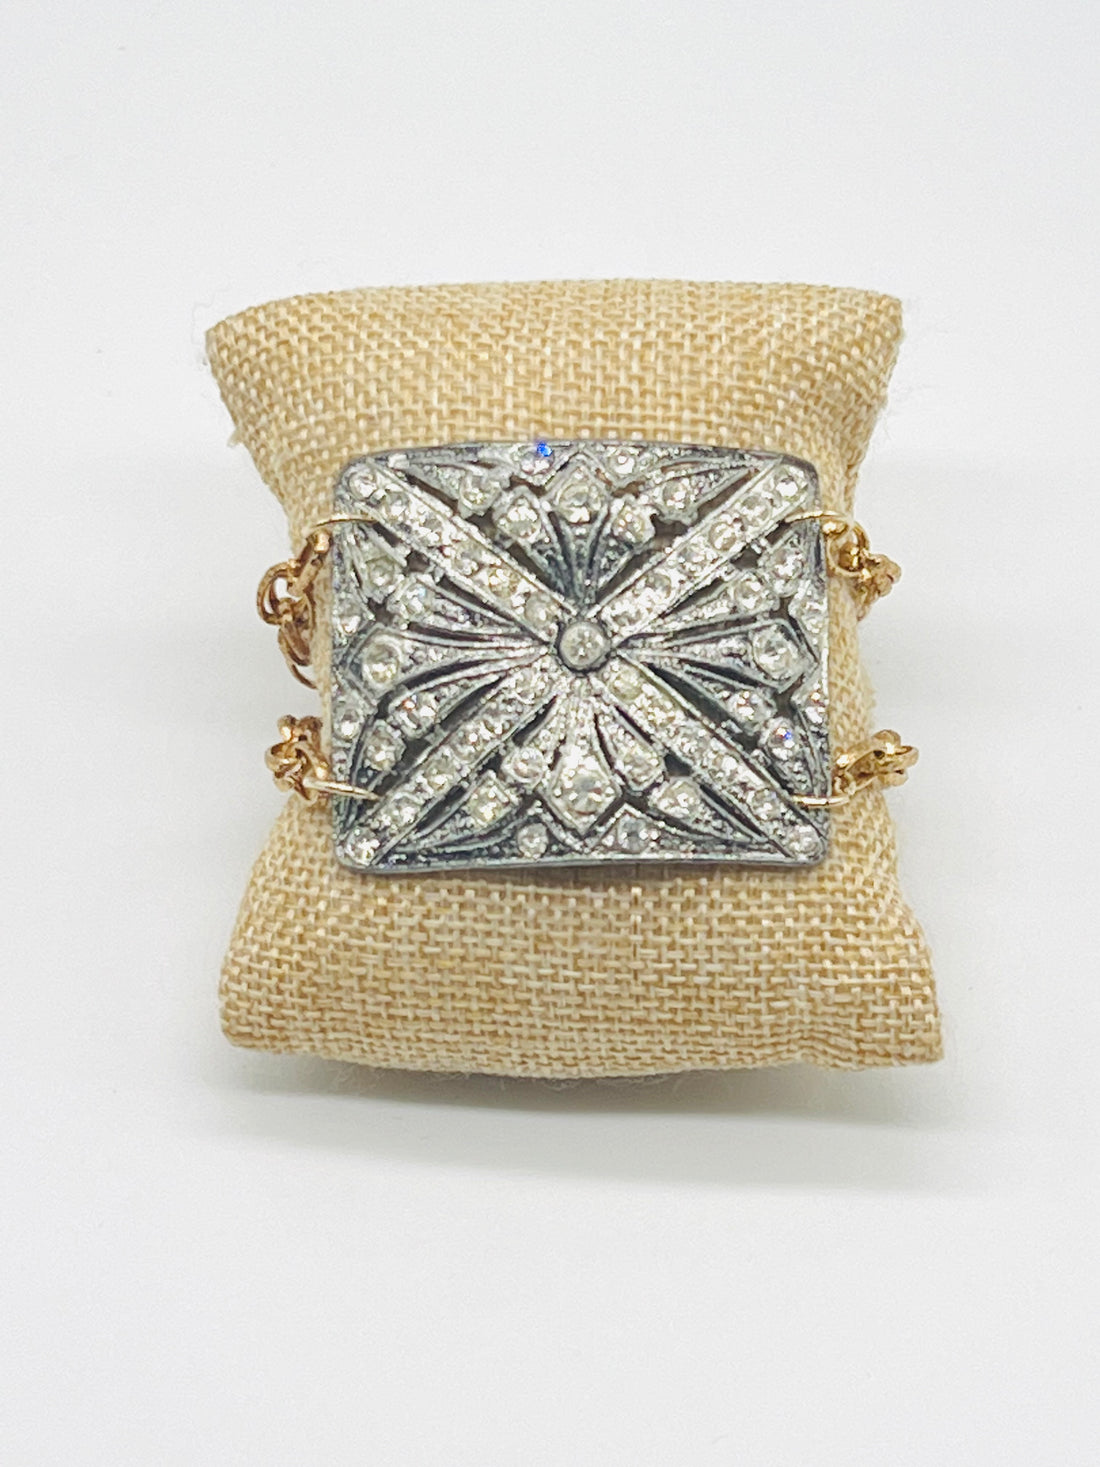 Vintage Art Deco Bracelet with Antique Shoe Buckle by hipV Modern Vintage Jewelry.